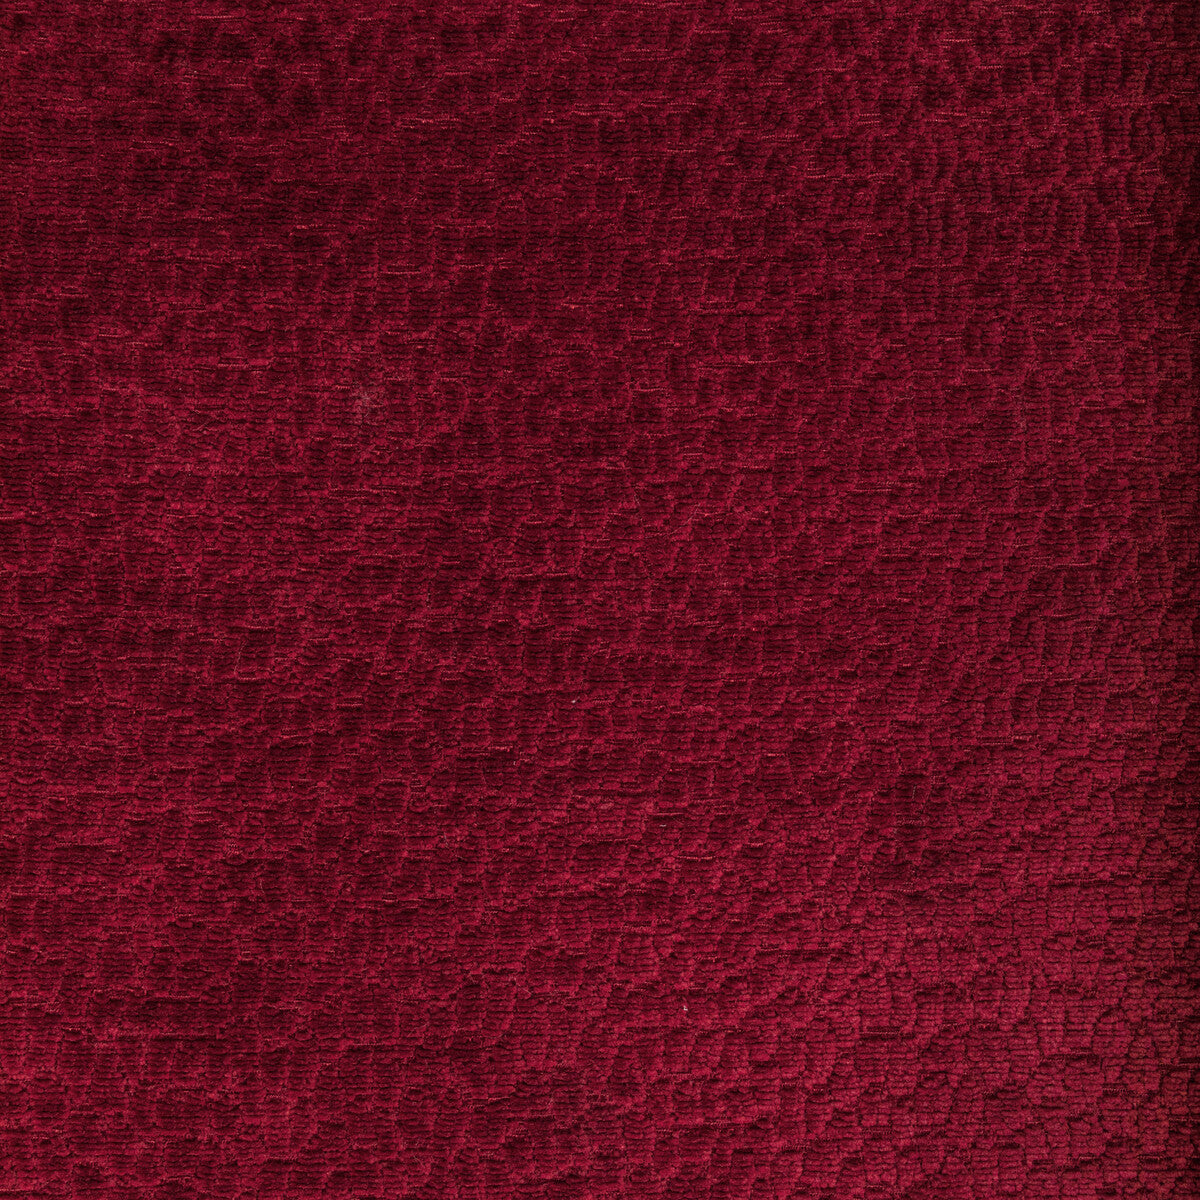 Kravet Smart fabric in 36606-19 color - pattern 36606.19.0 - by Kravet Smart in the Performance Kravetarmor collection